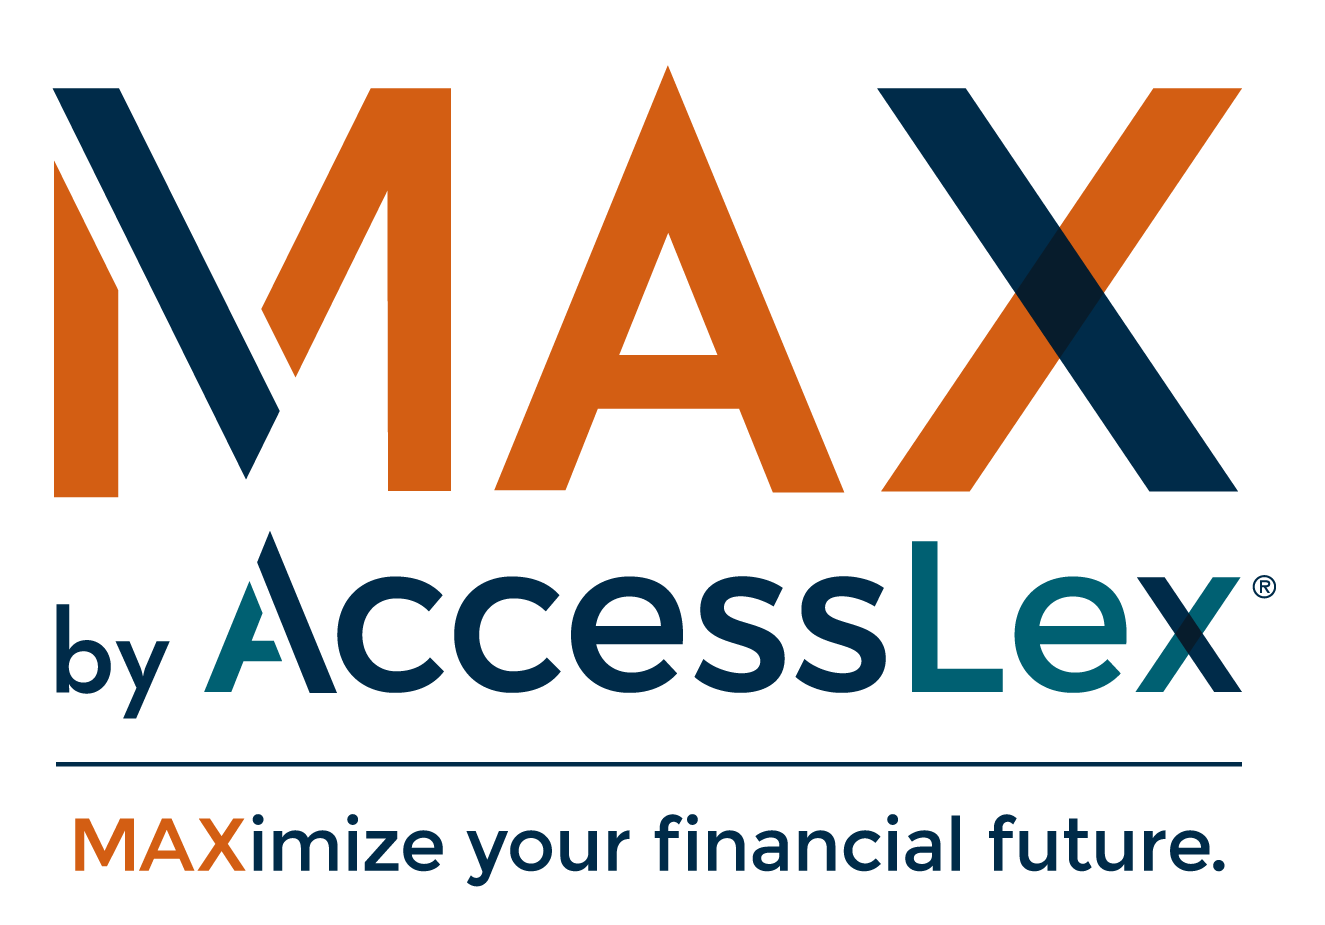 MAX by AccessLex Logo